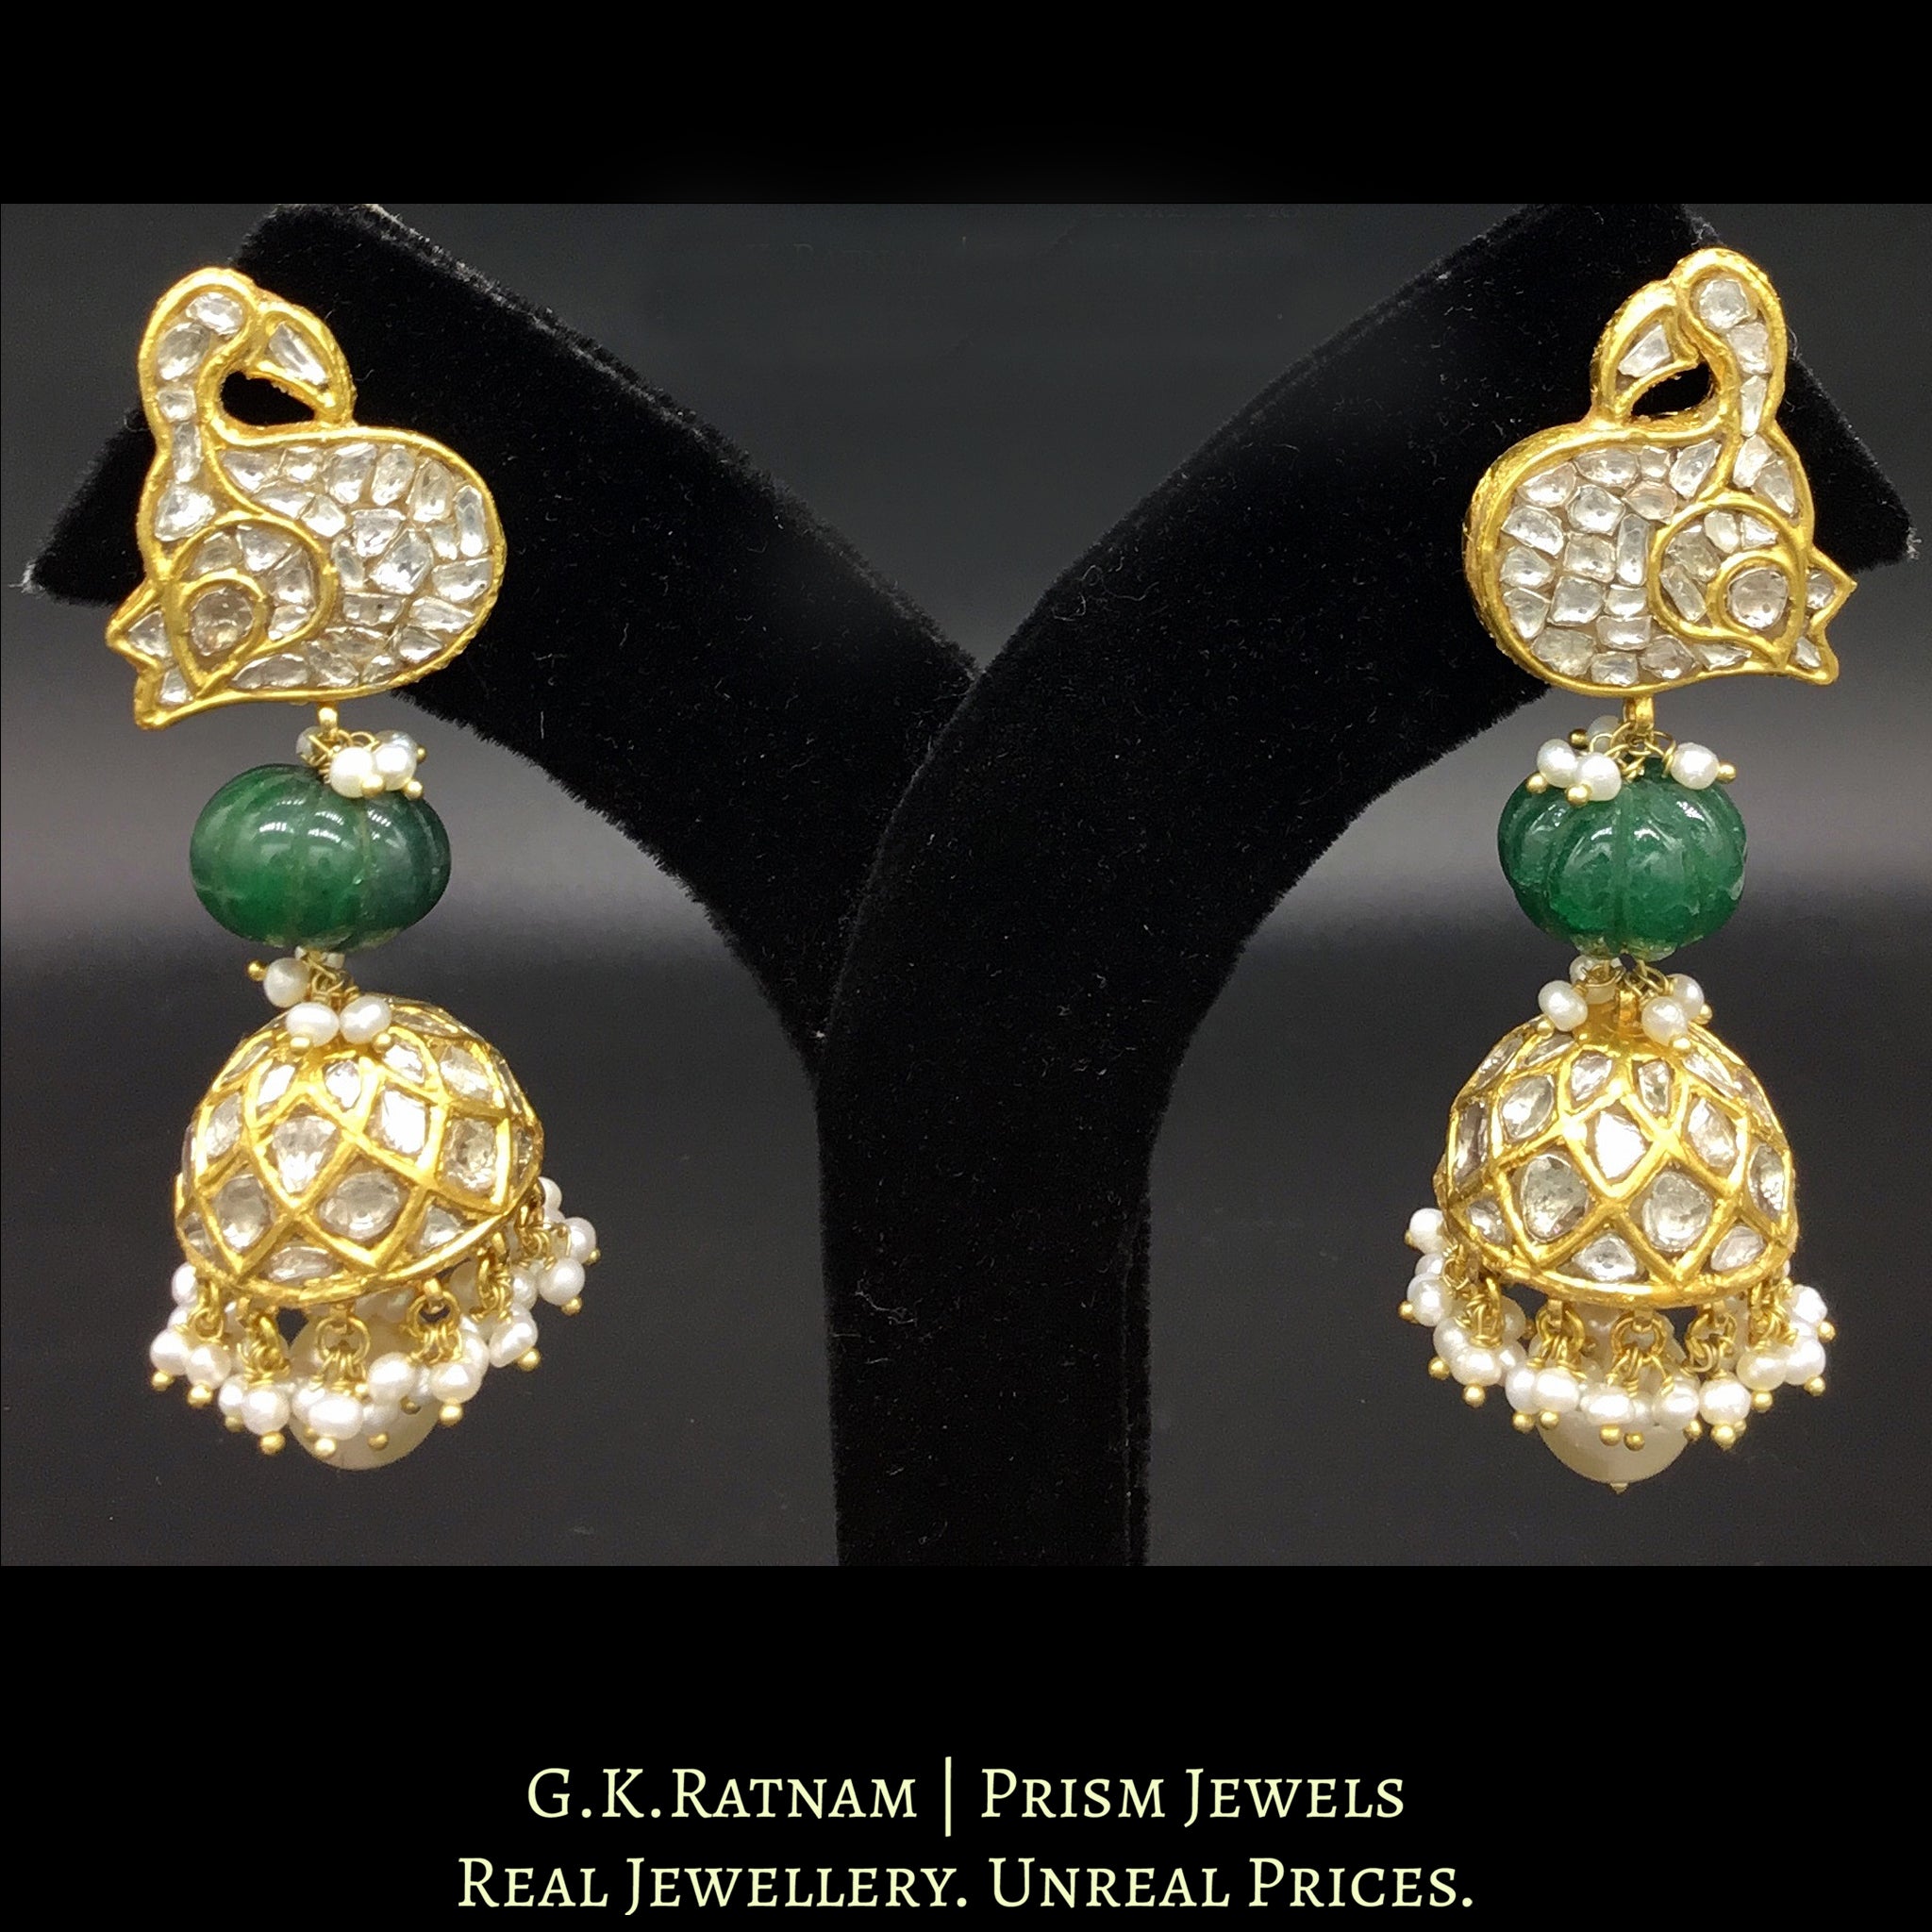 23k Gold and Diamond Polki Jhumki Earring Pair with peacock (mor) shaped tops